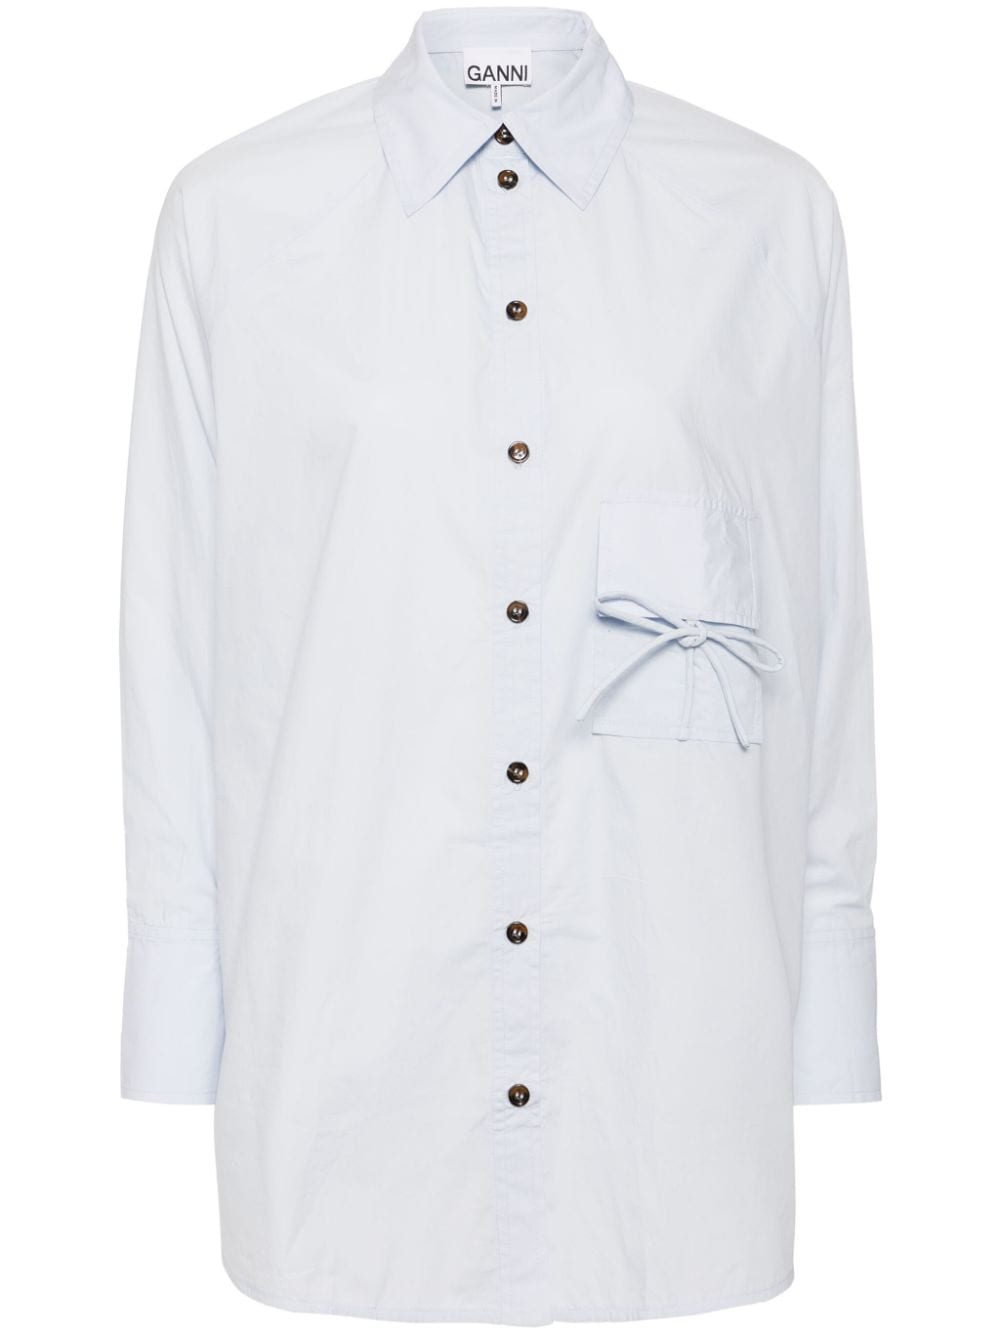 Image 1 of GANNI bow-detailing cotton shirt